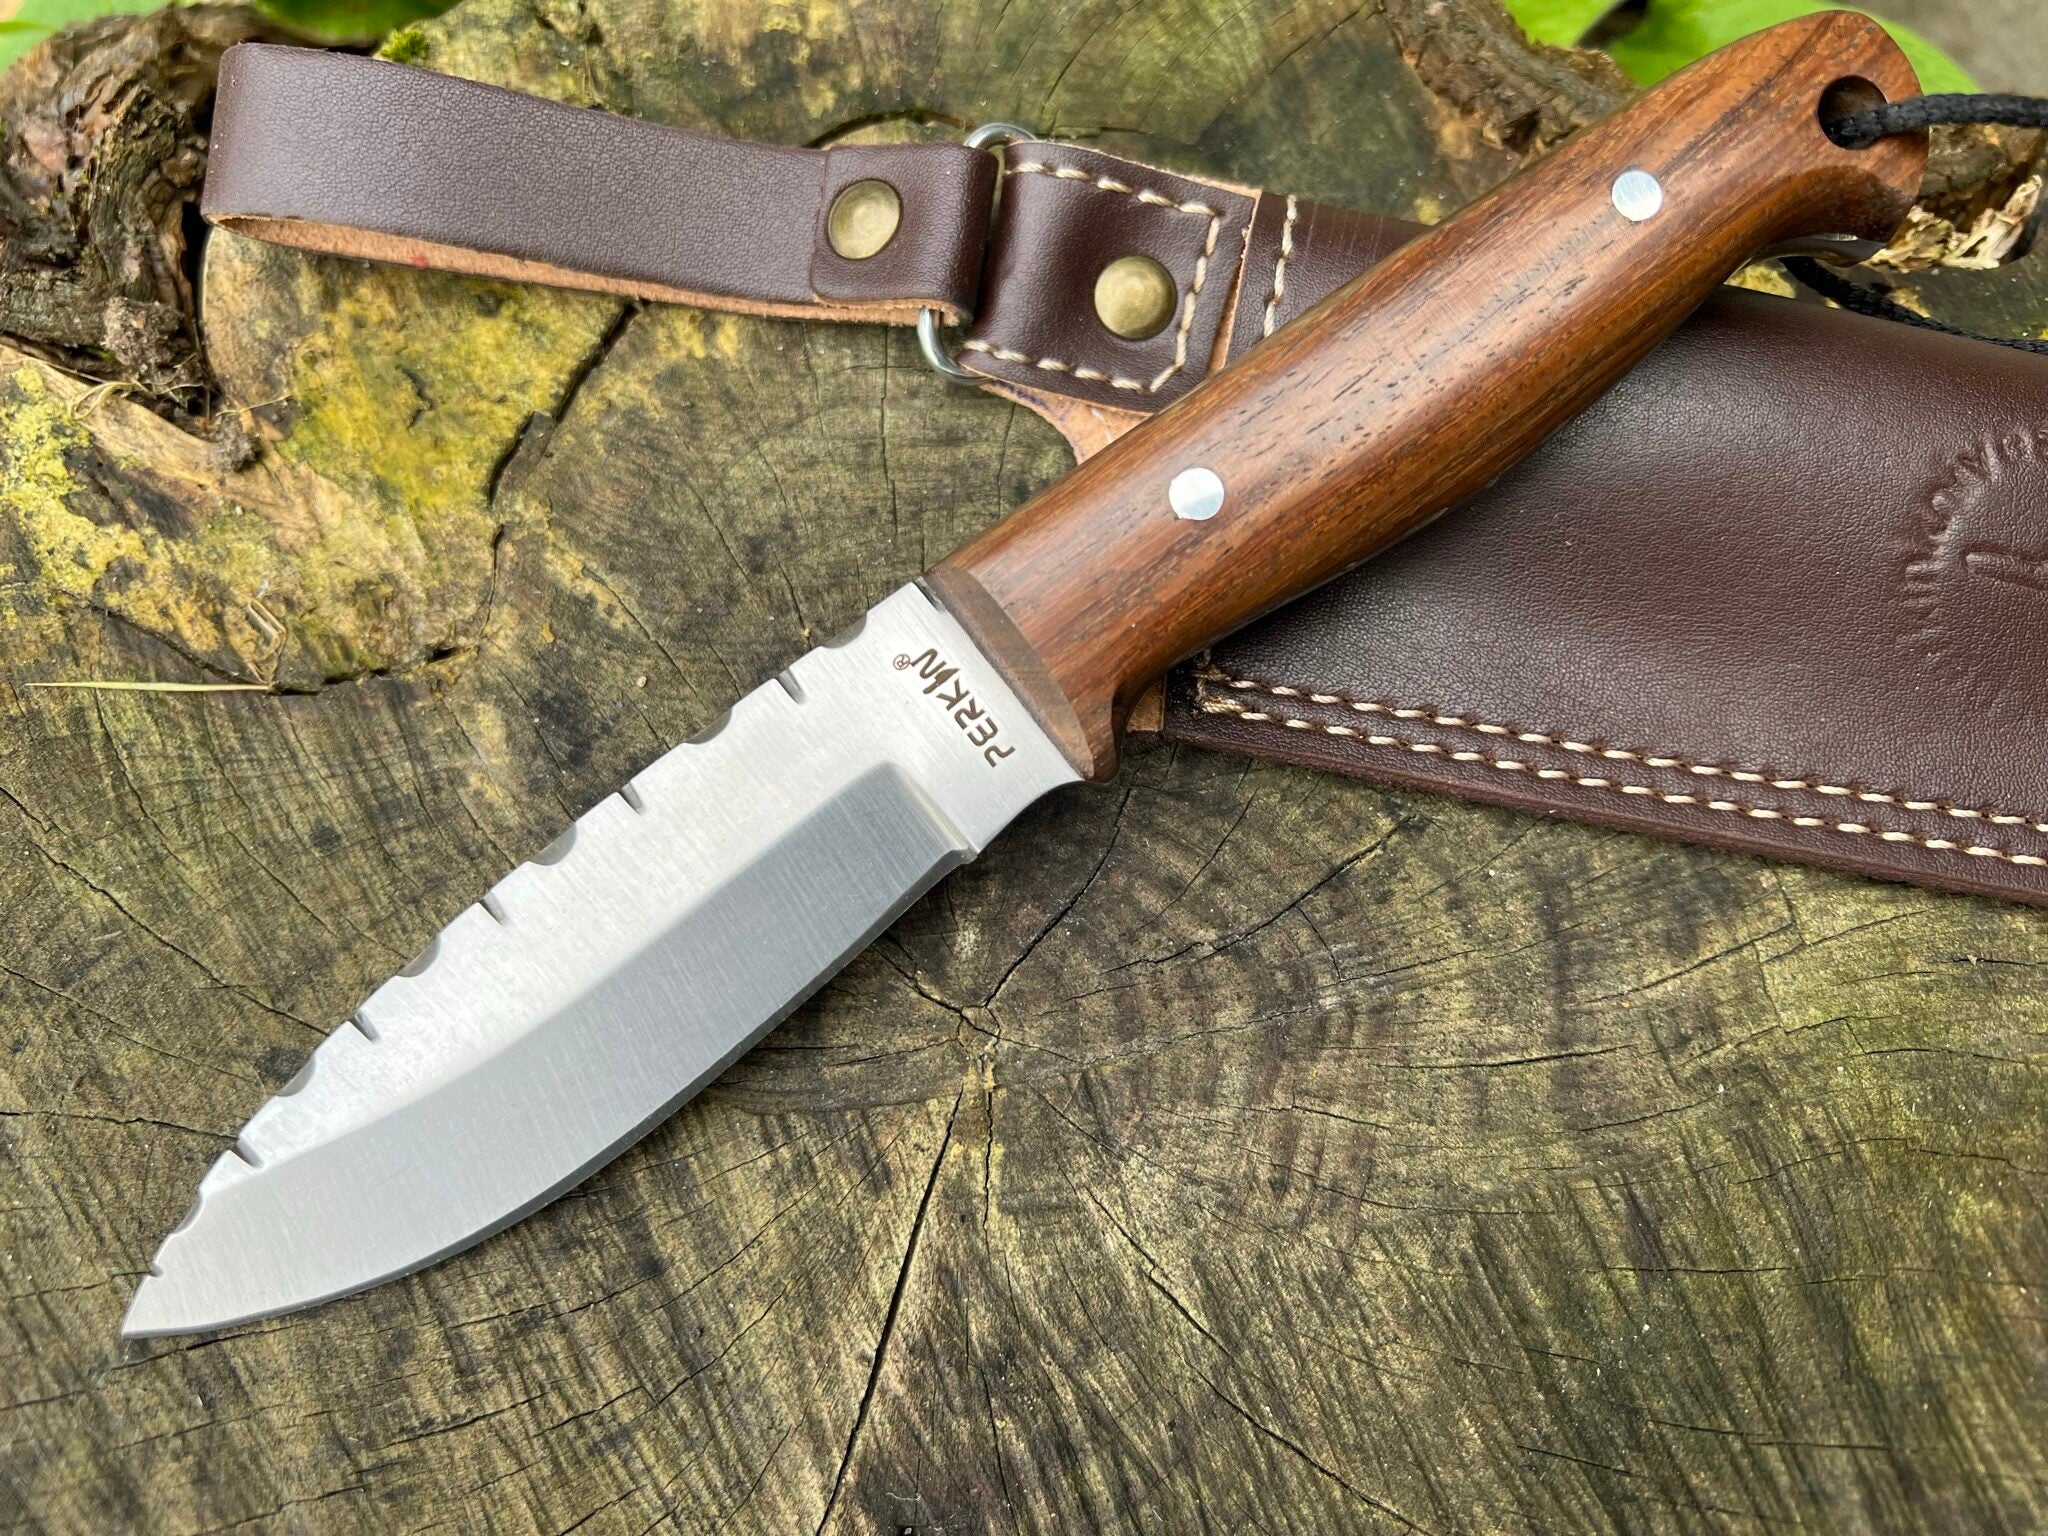 Handmade Bushcraft Knife - Bone Handle - Outstanding Value